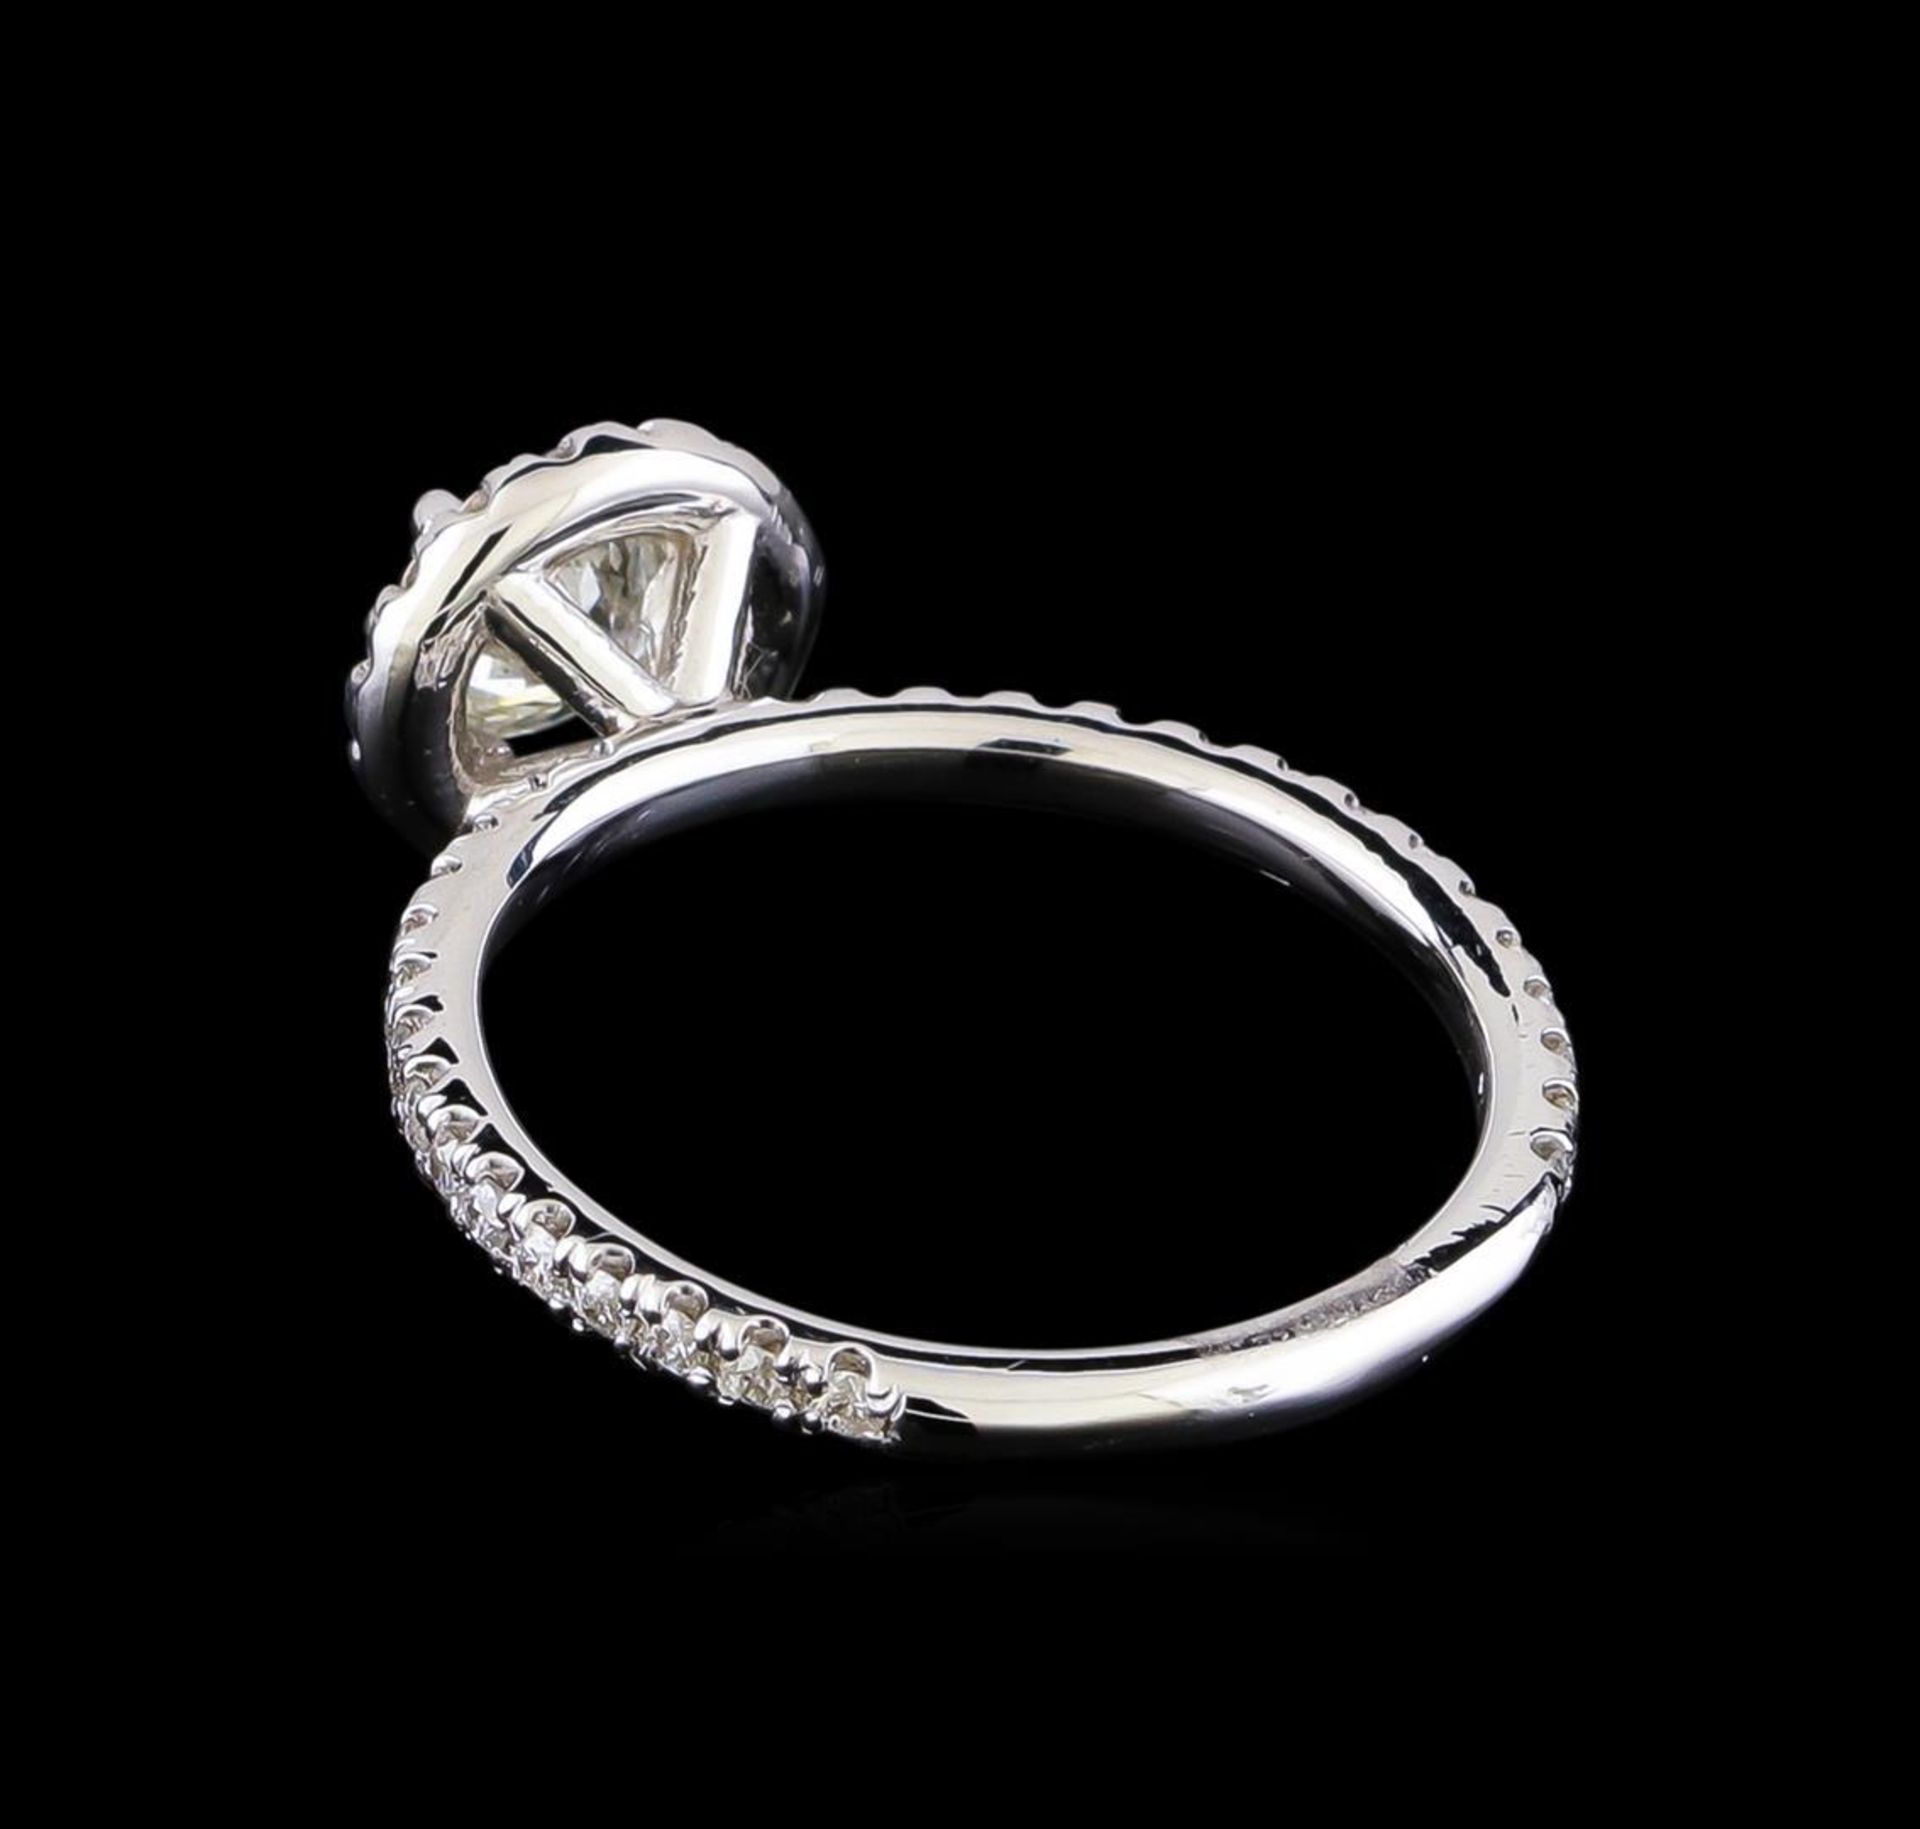 1.15 ctw Diamond Ring - 14KT White Gold - Image 3 of 5